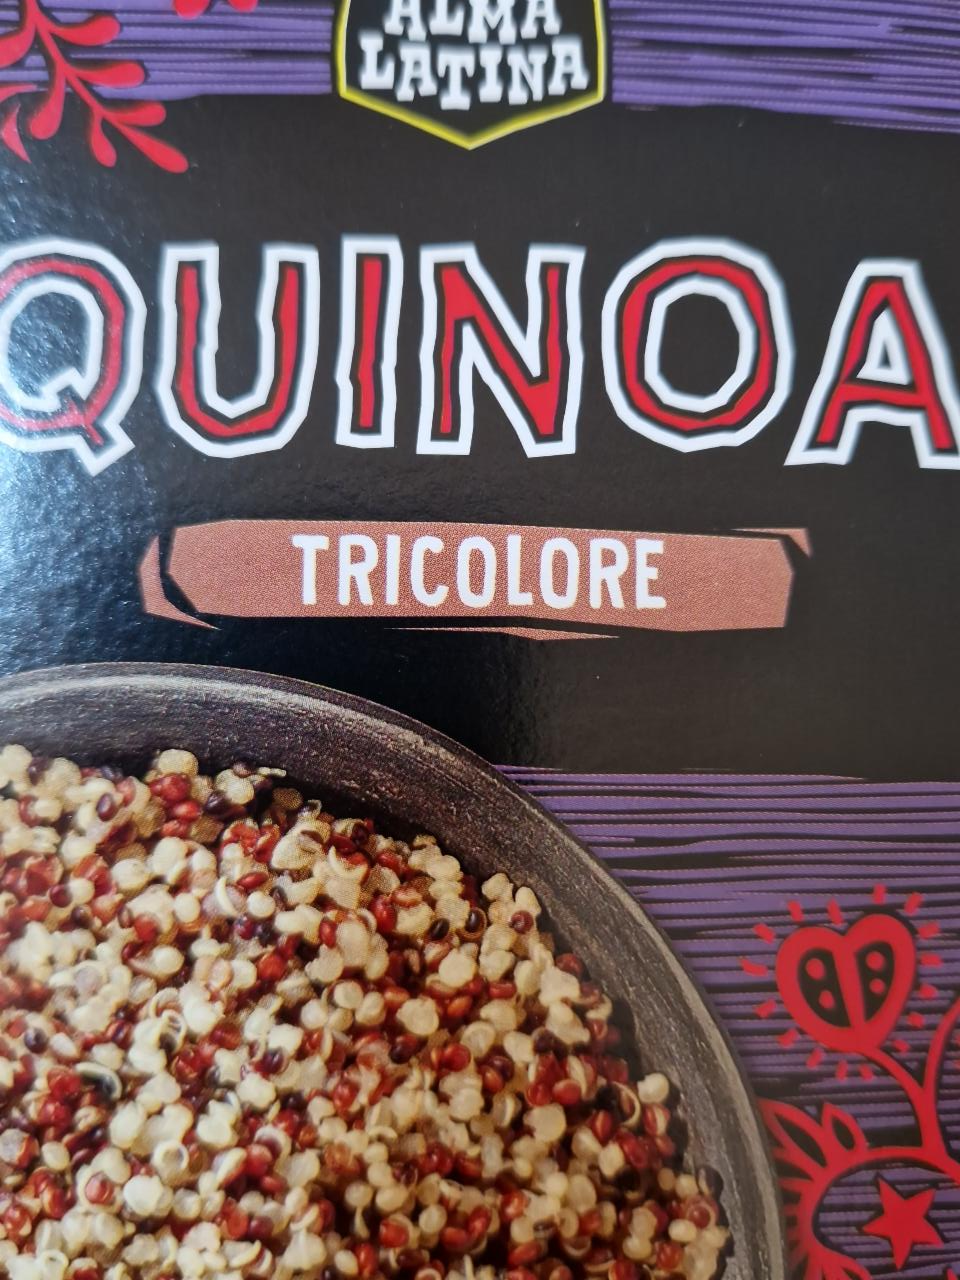 Quinoa tricolore Alma Latina - kalorie, kJ a nutriční hodnoty